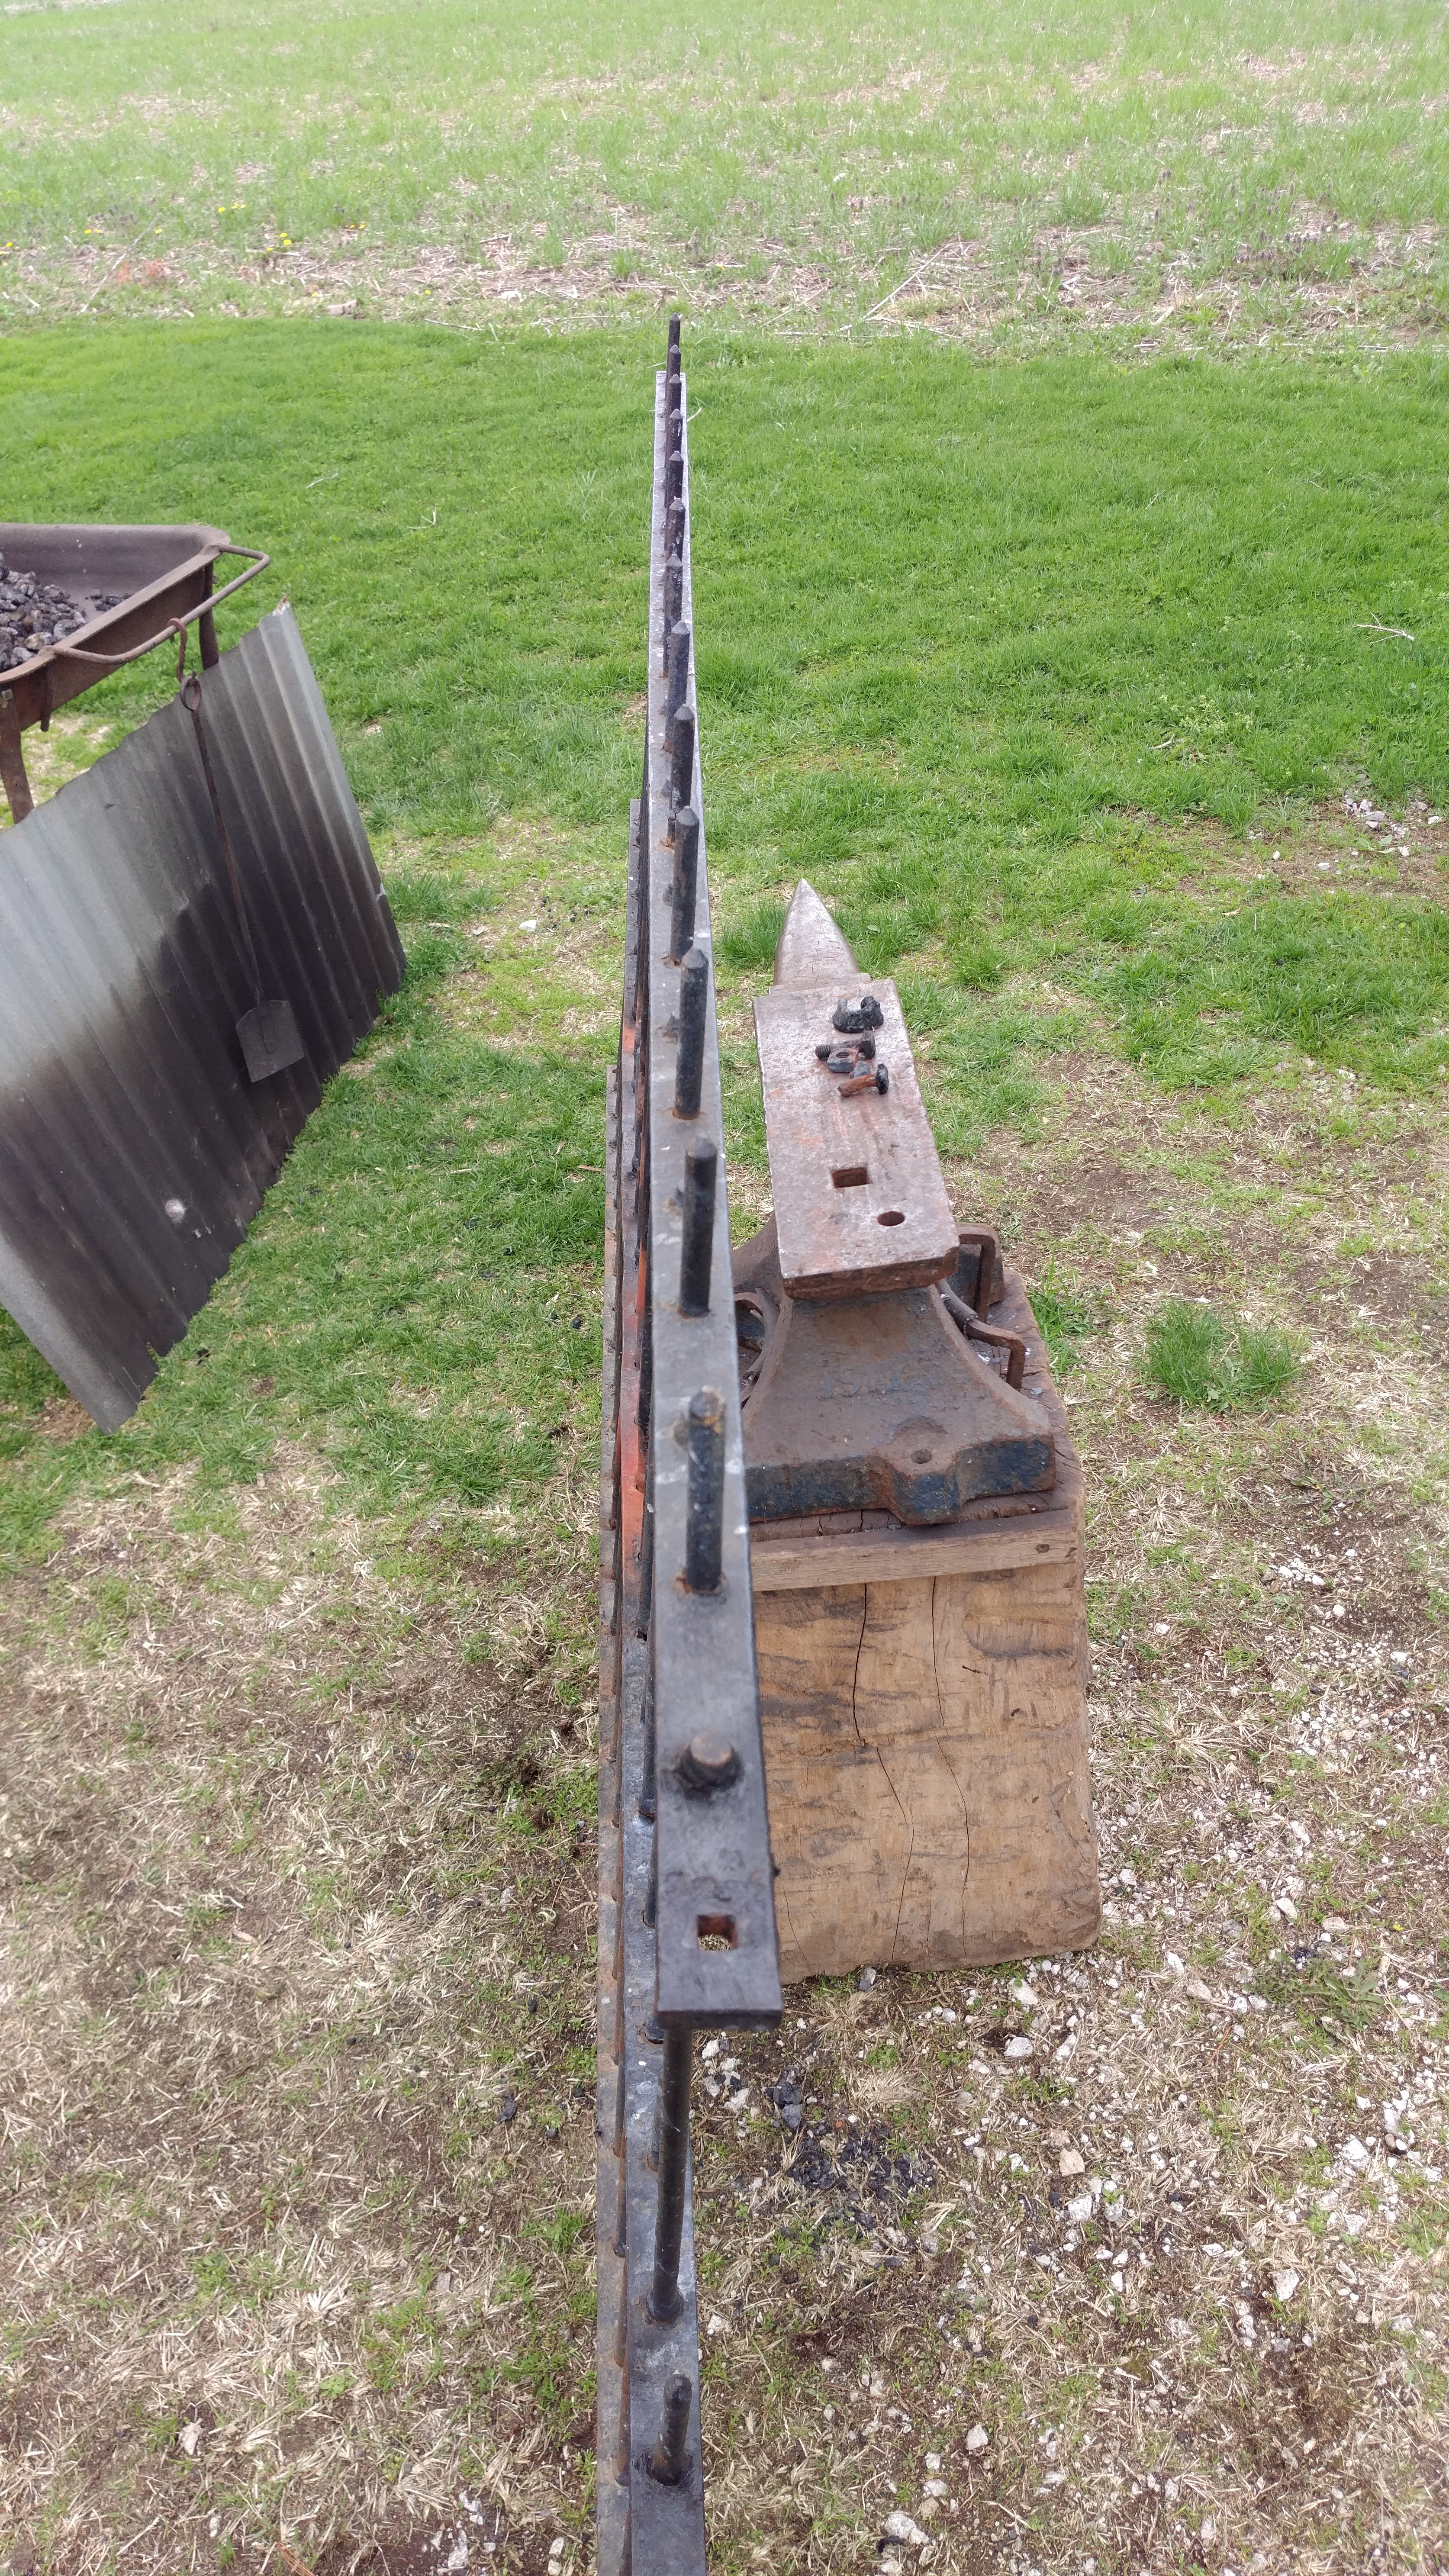 Wrought Iron
Blacksmith
Lafayette
Coal 
Forge
Anvil
Repair